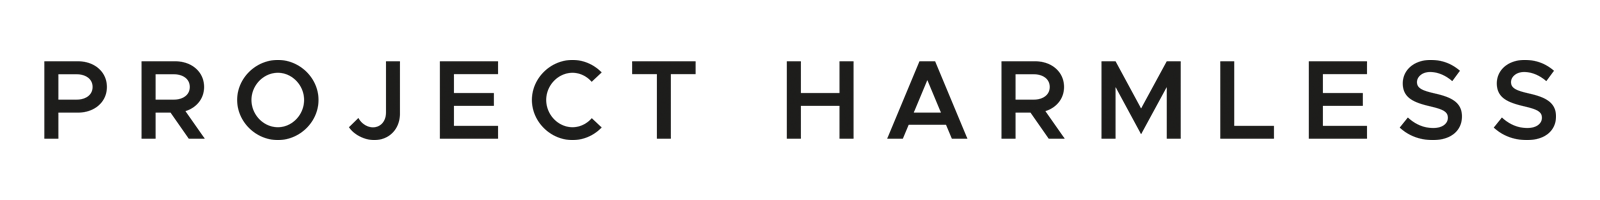 Project Harmless Logo